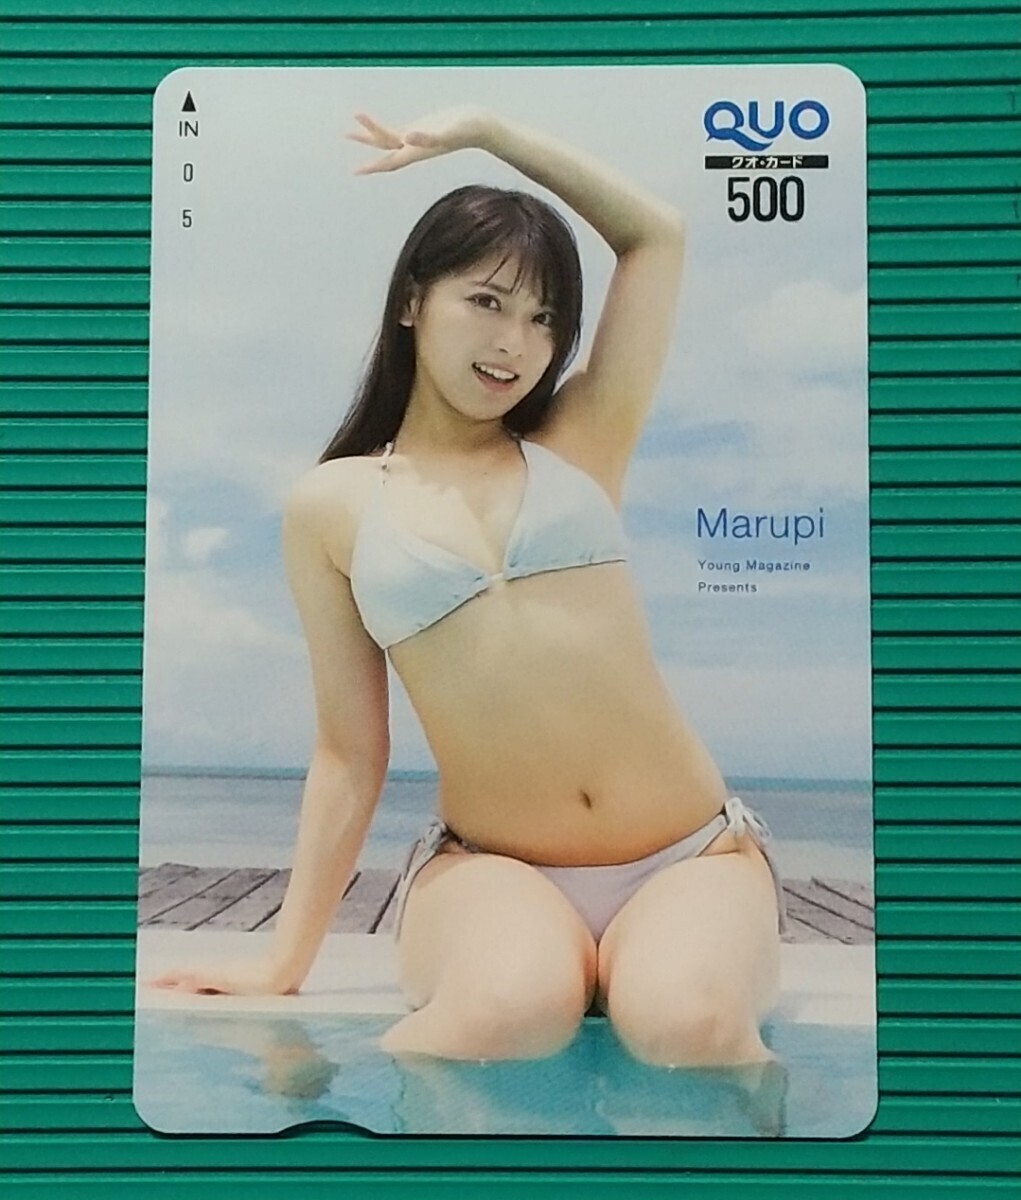 ⑩.....{ :. pre Marupi / Young Magzine Presents QUO card QUO500 1 sheets.